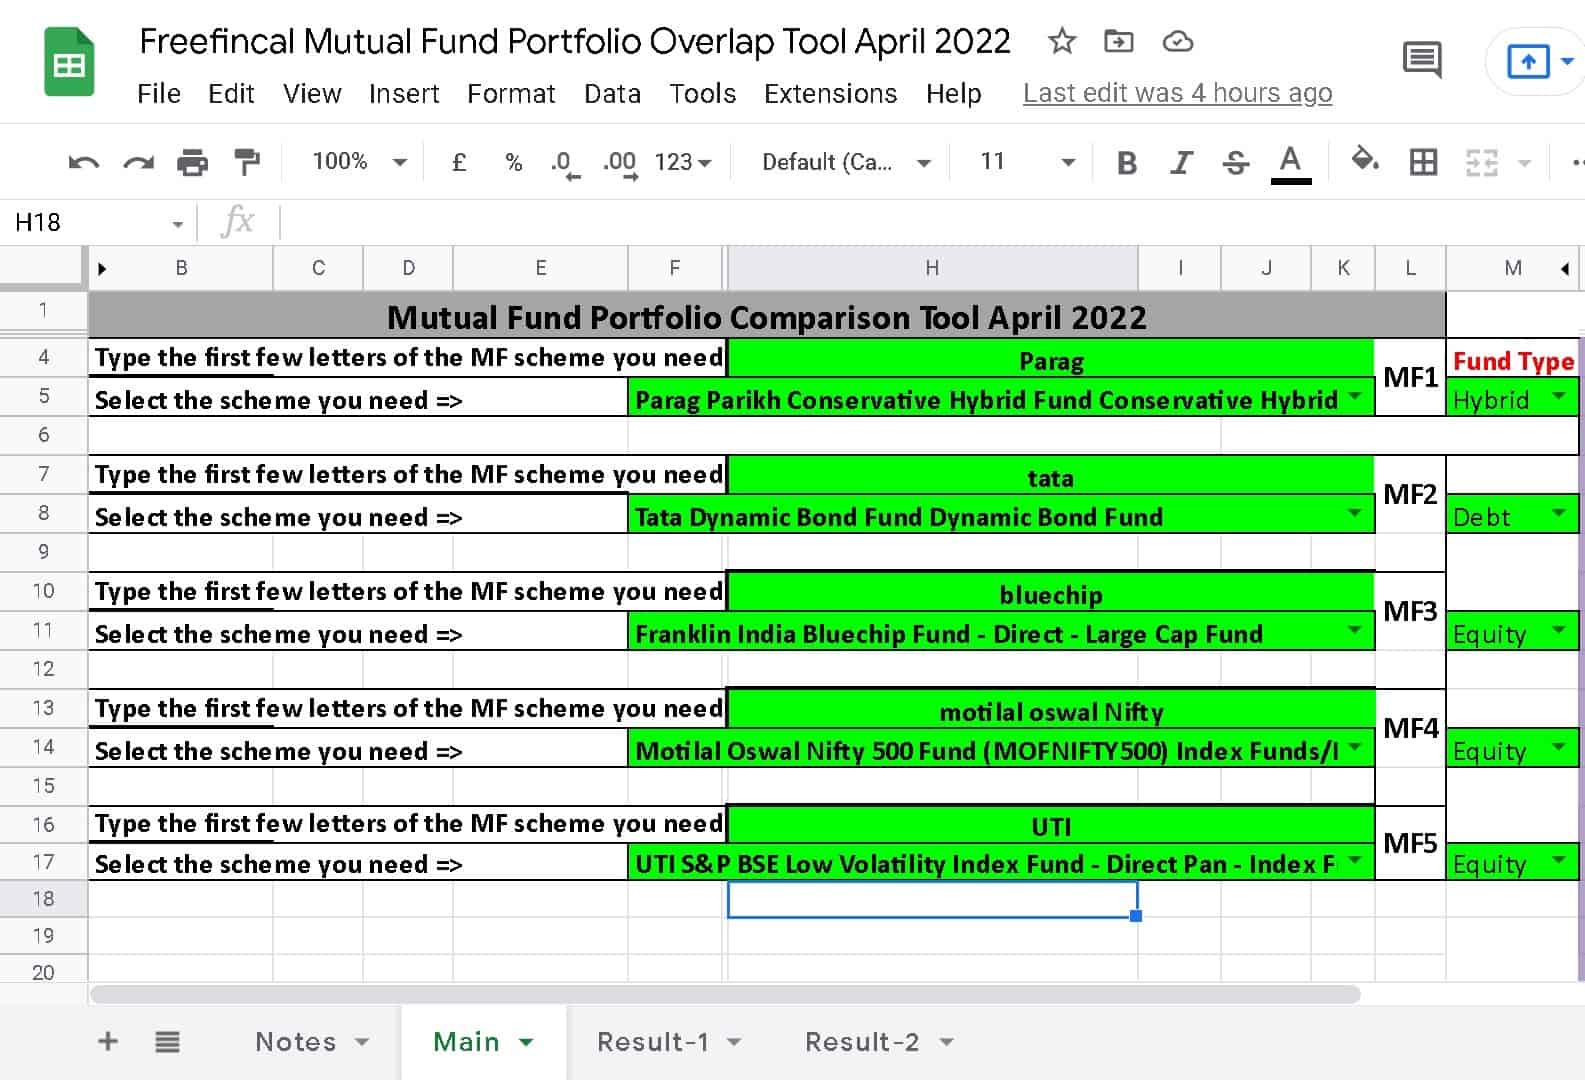 Screenshot of the Freefincal Mutual Fund Portfolio Overlap Tool - main dashboard